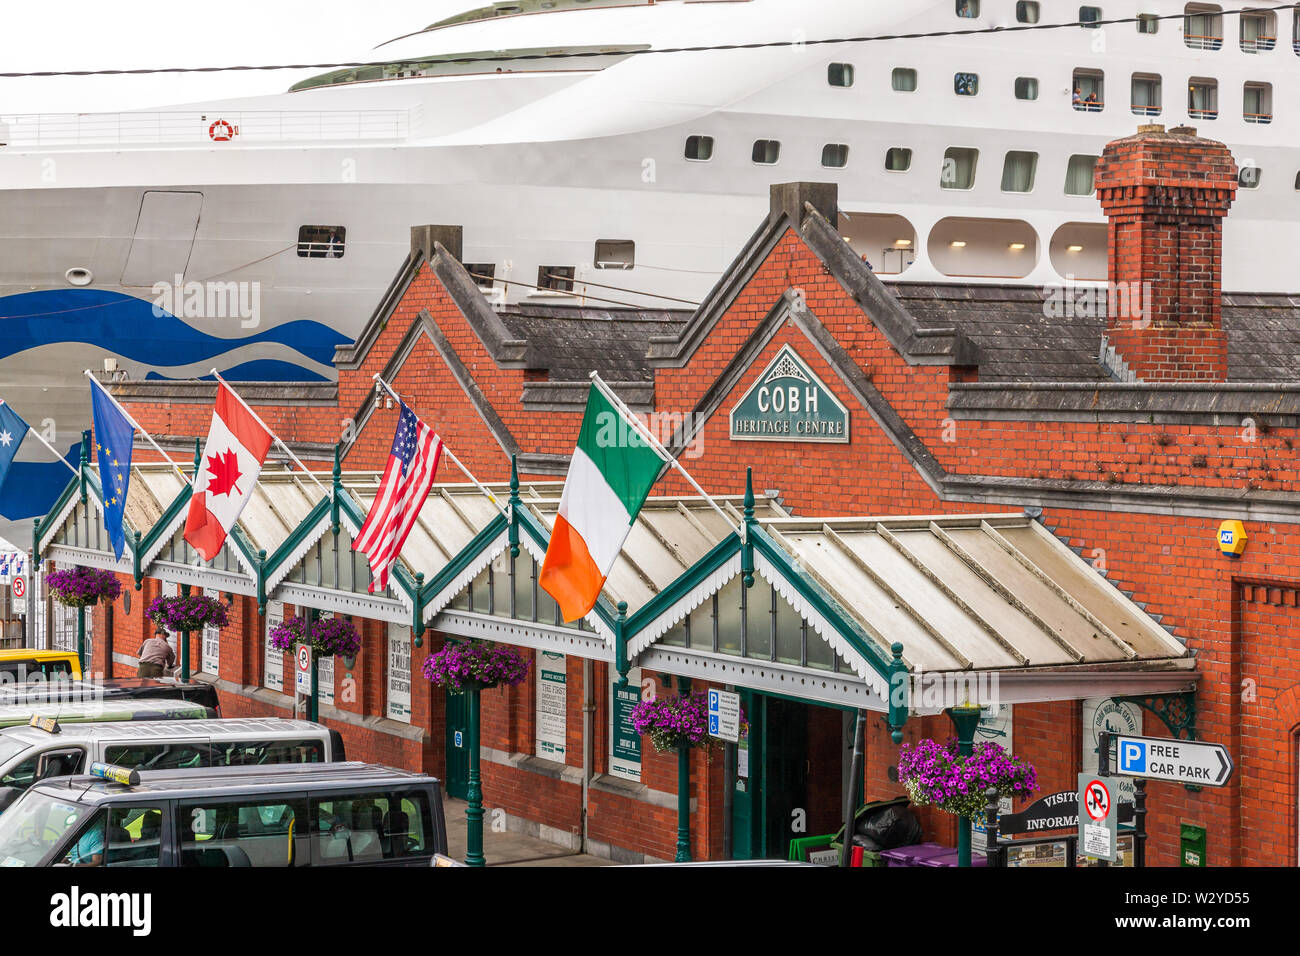 Port - Cork, Ireland (Cobh - For Blarney - Princess Cruises